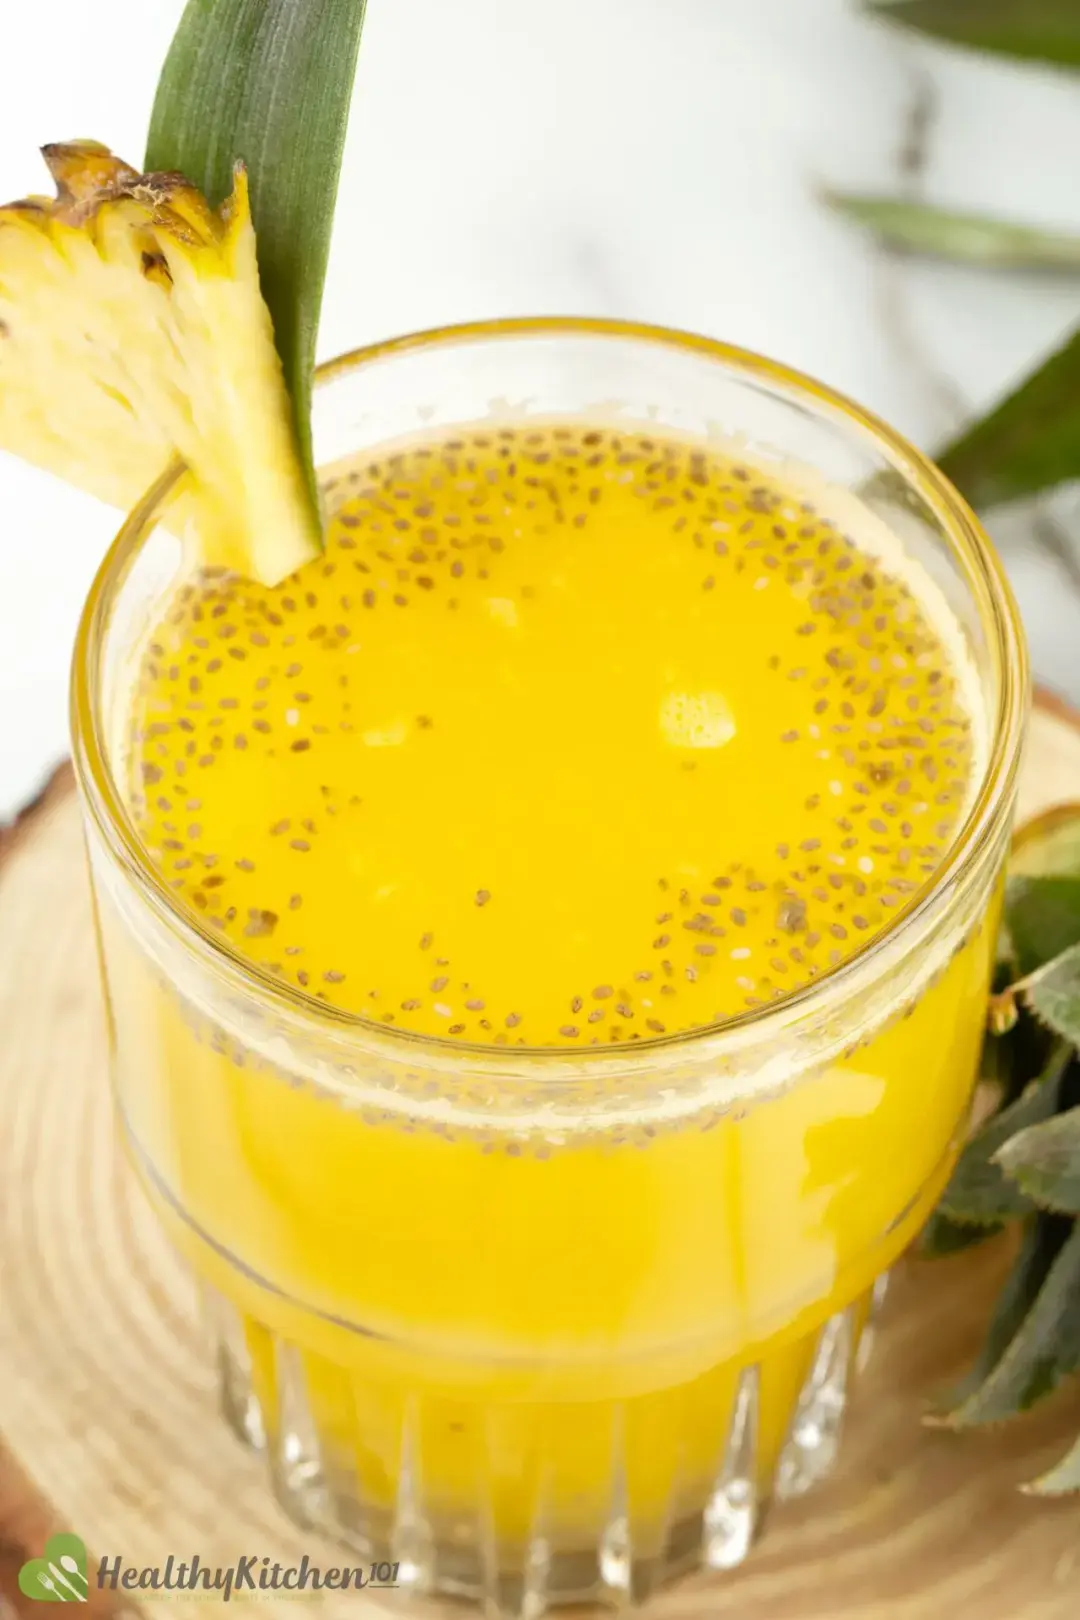 Added Sugar Free Pineapple Juice Recipe Healthykitchen101